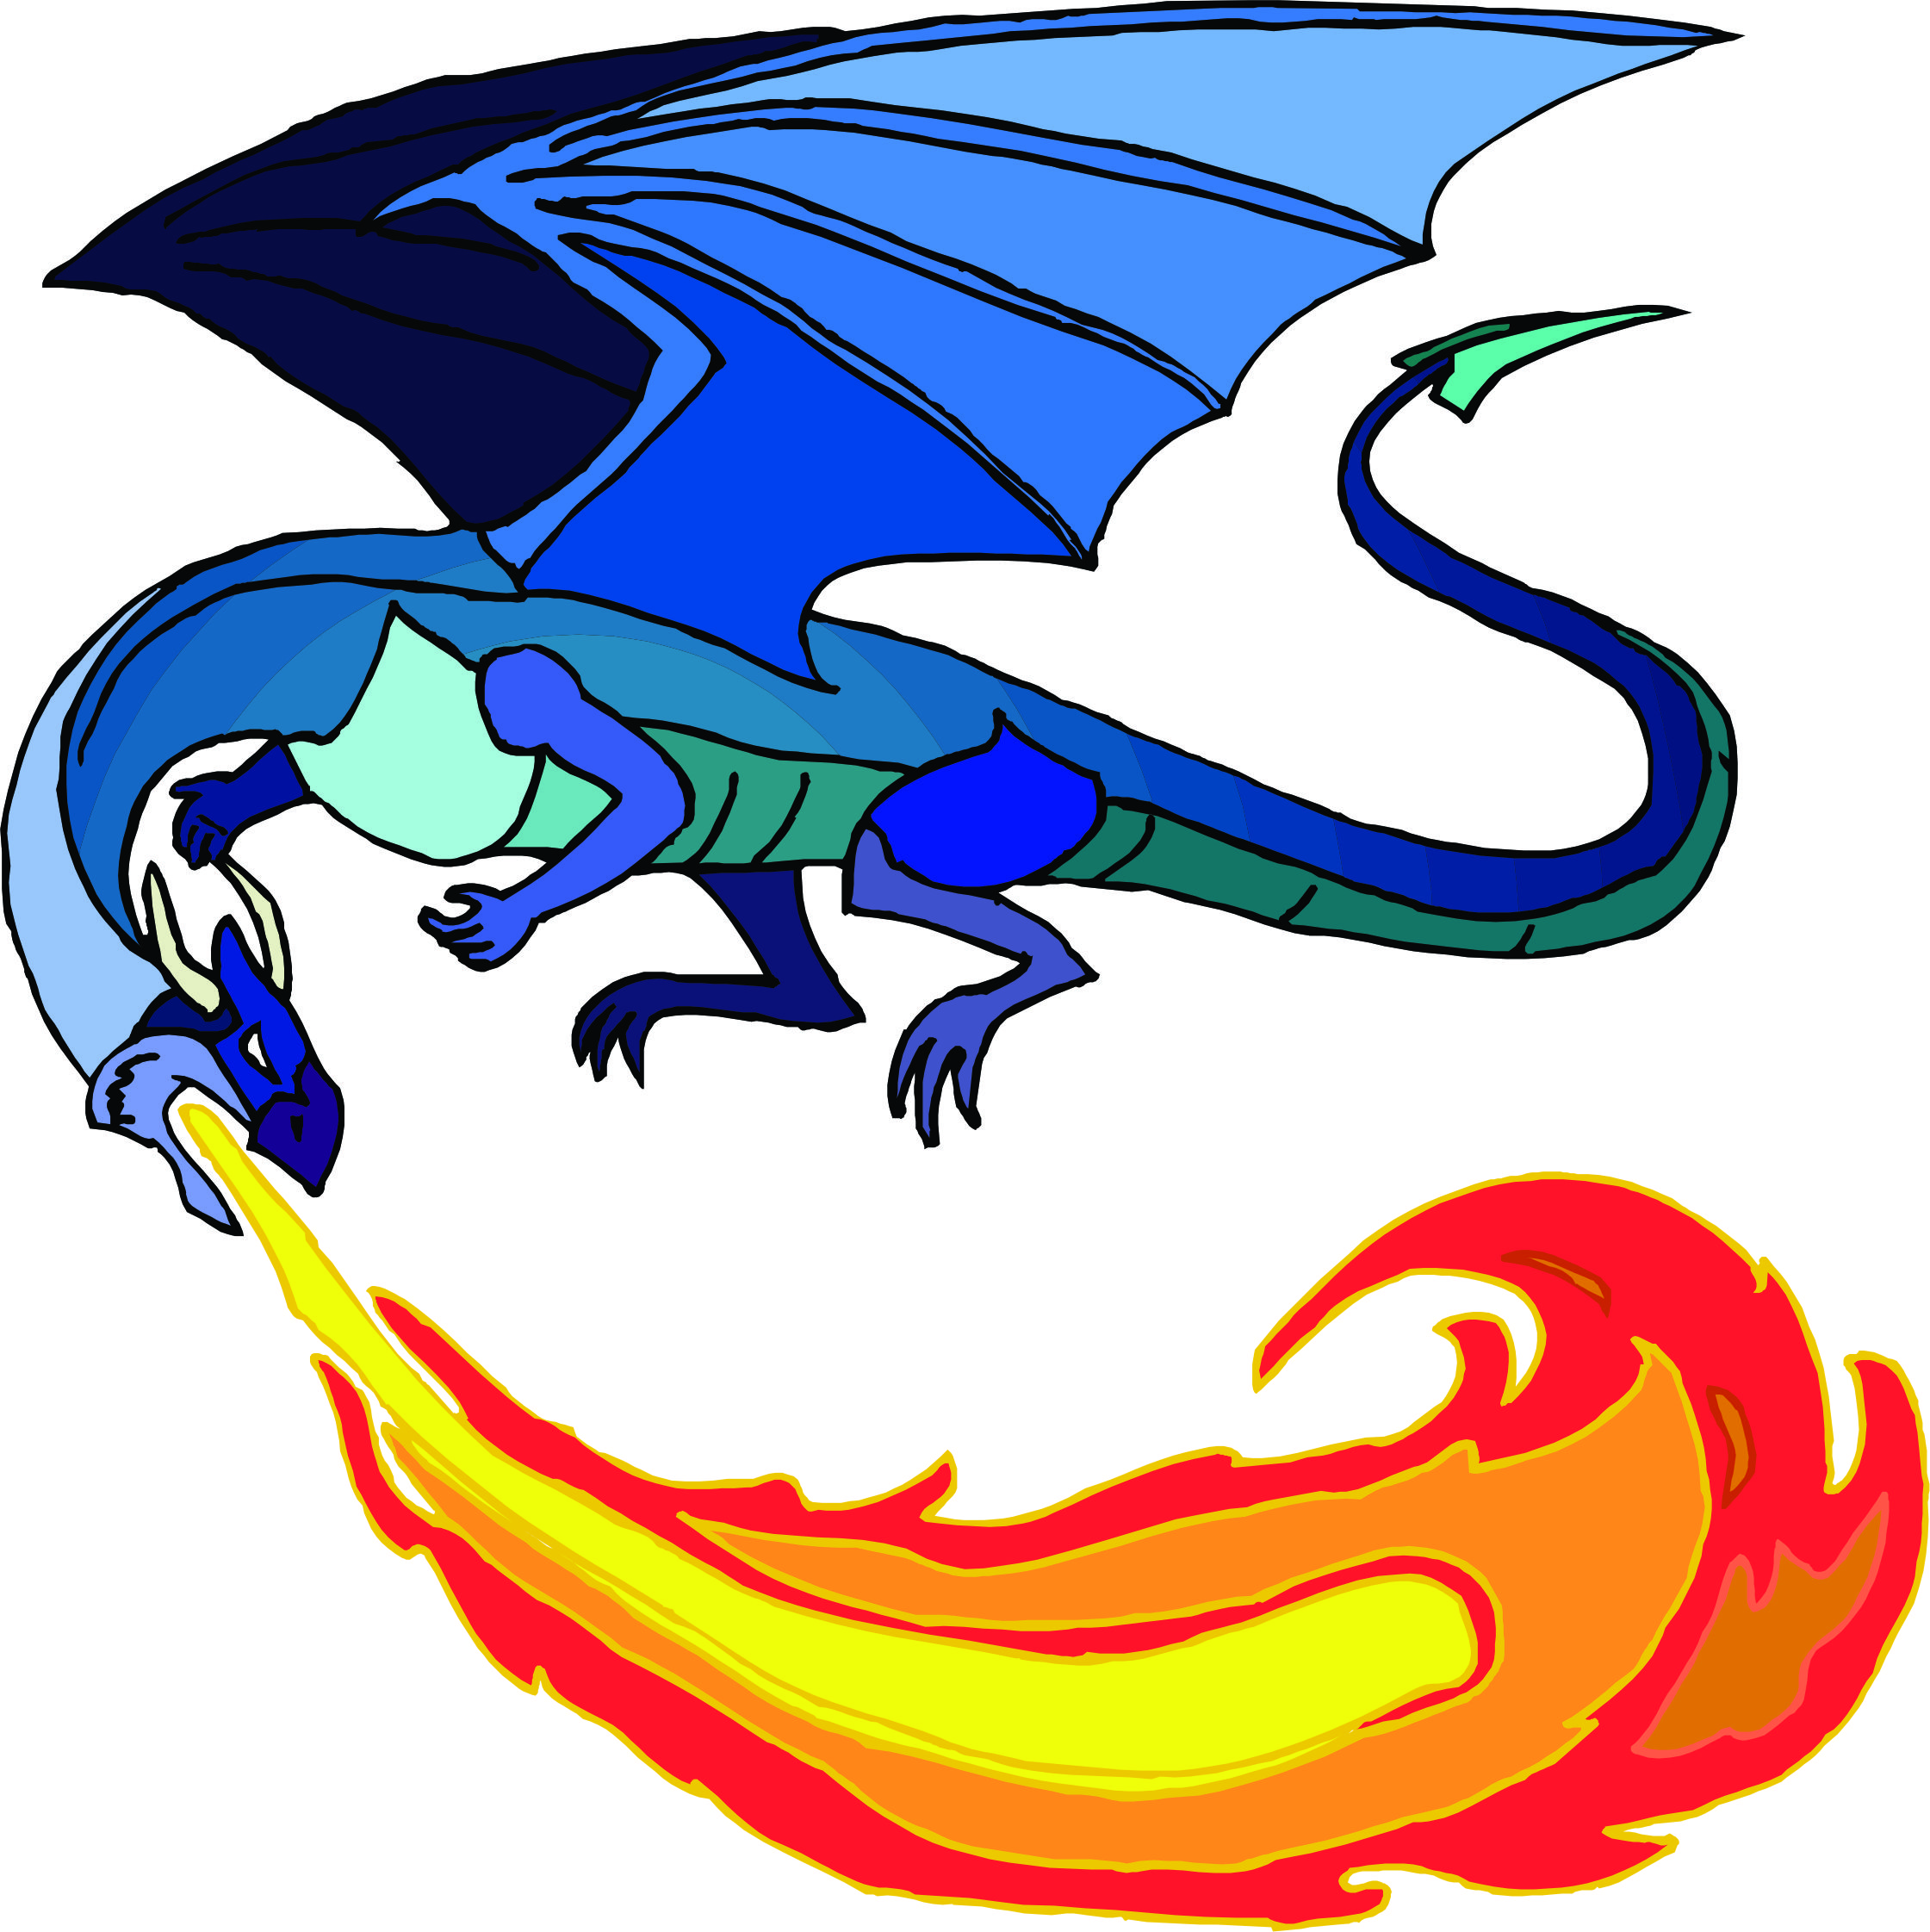 Character clipart flame. Dragon flames drawing at